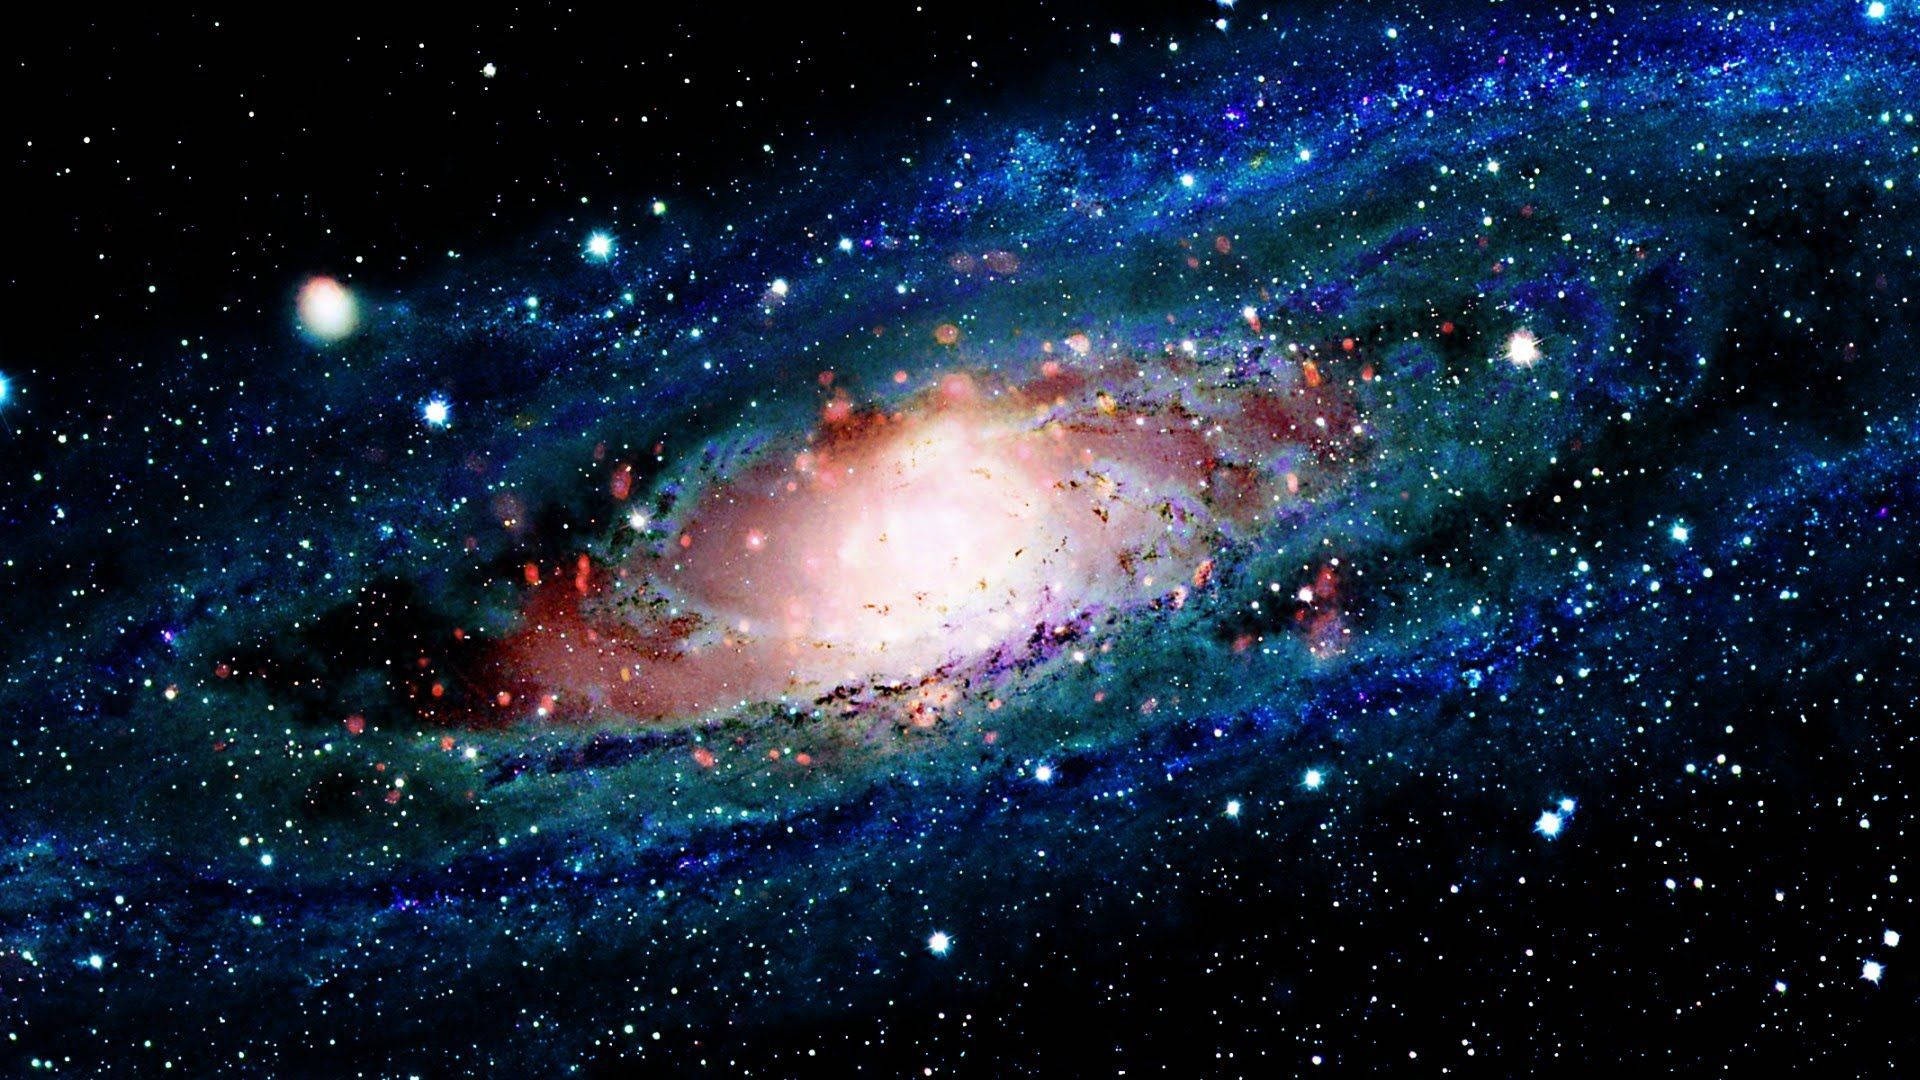 4k Ultra Hd Galaxy Wallpaper Images